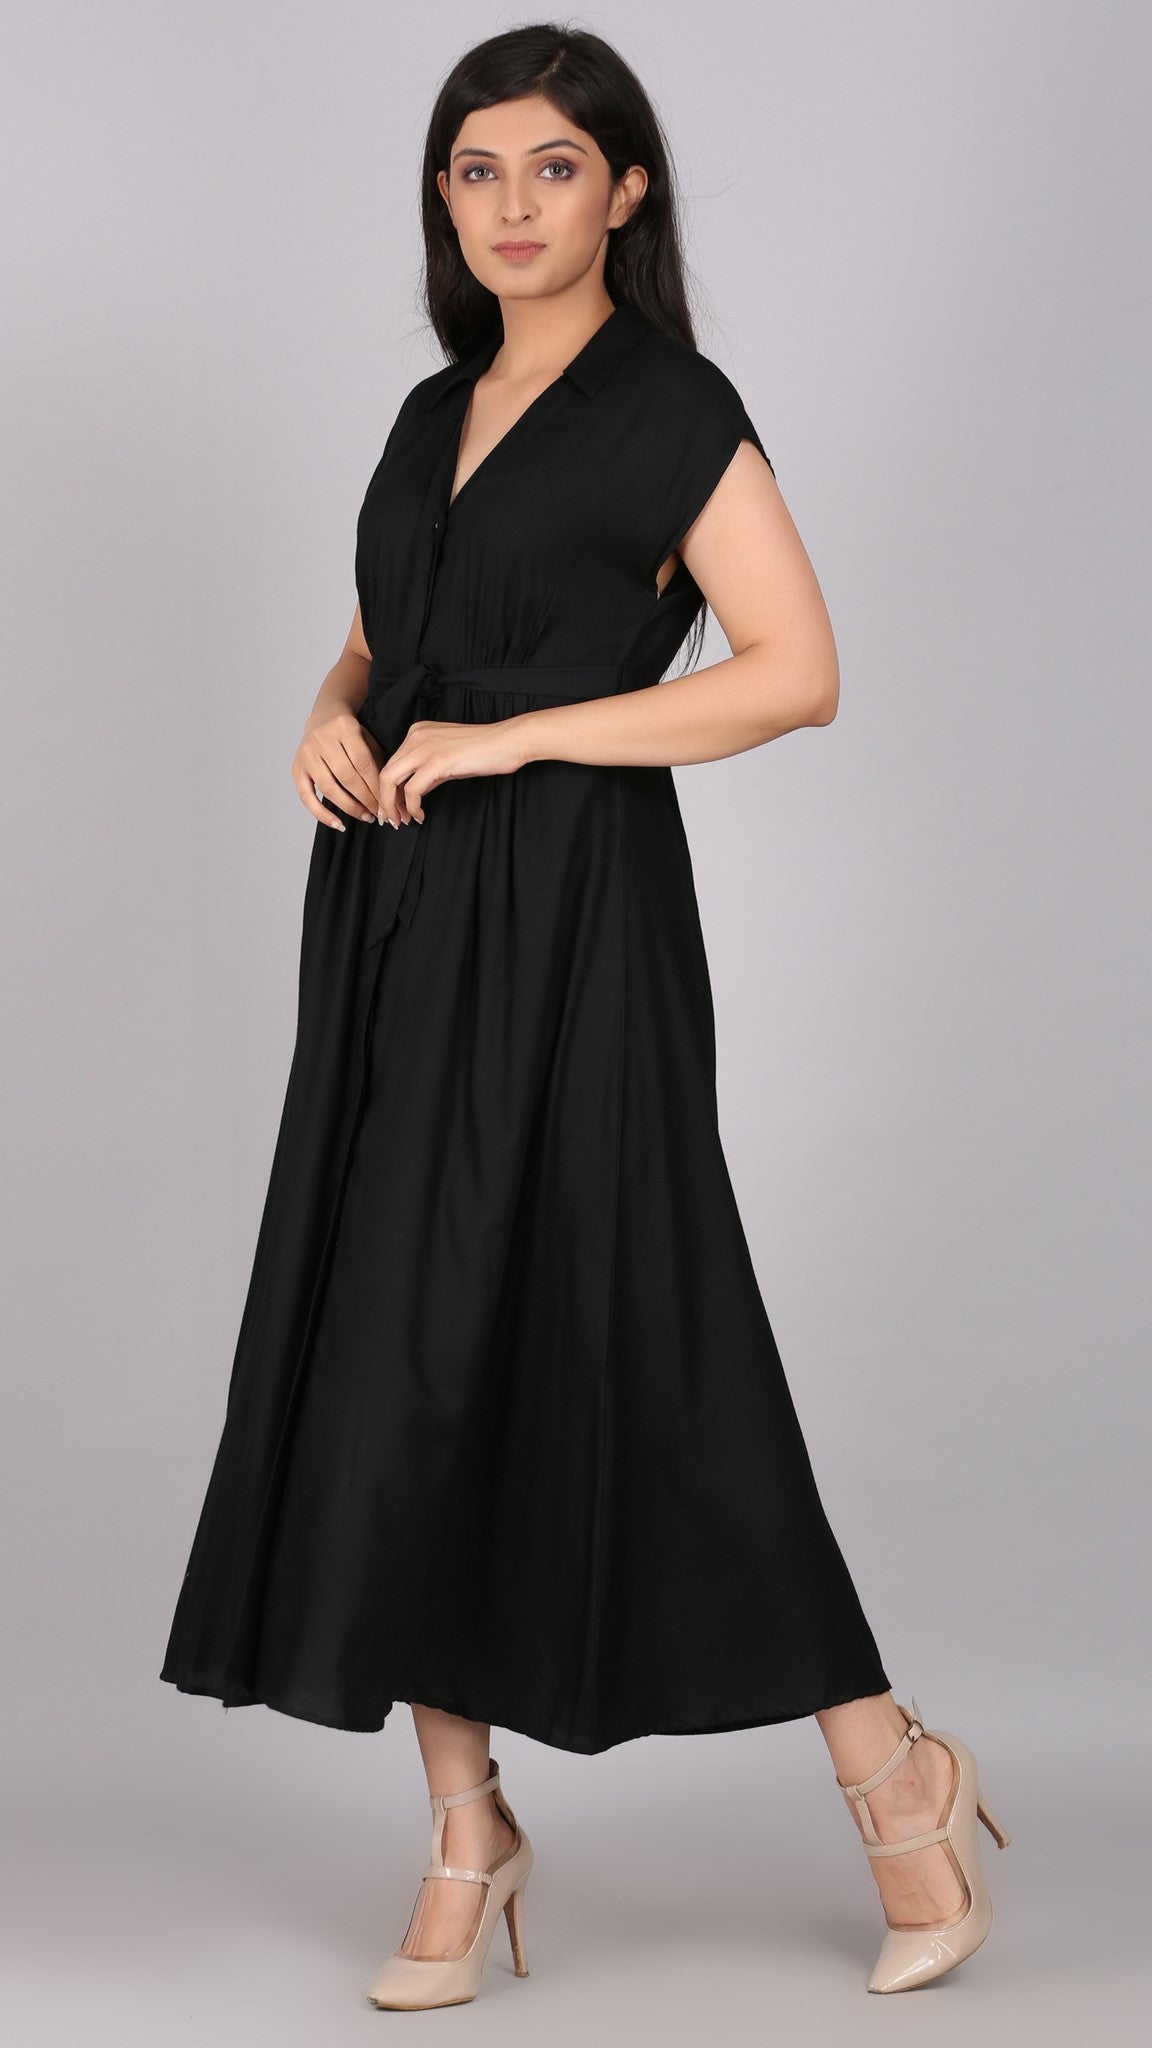 Solid Black Long Dress